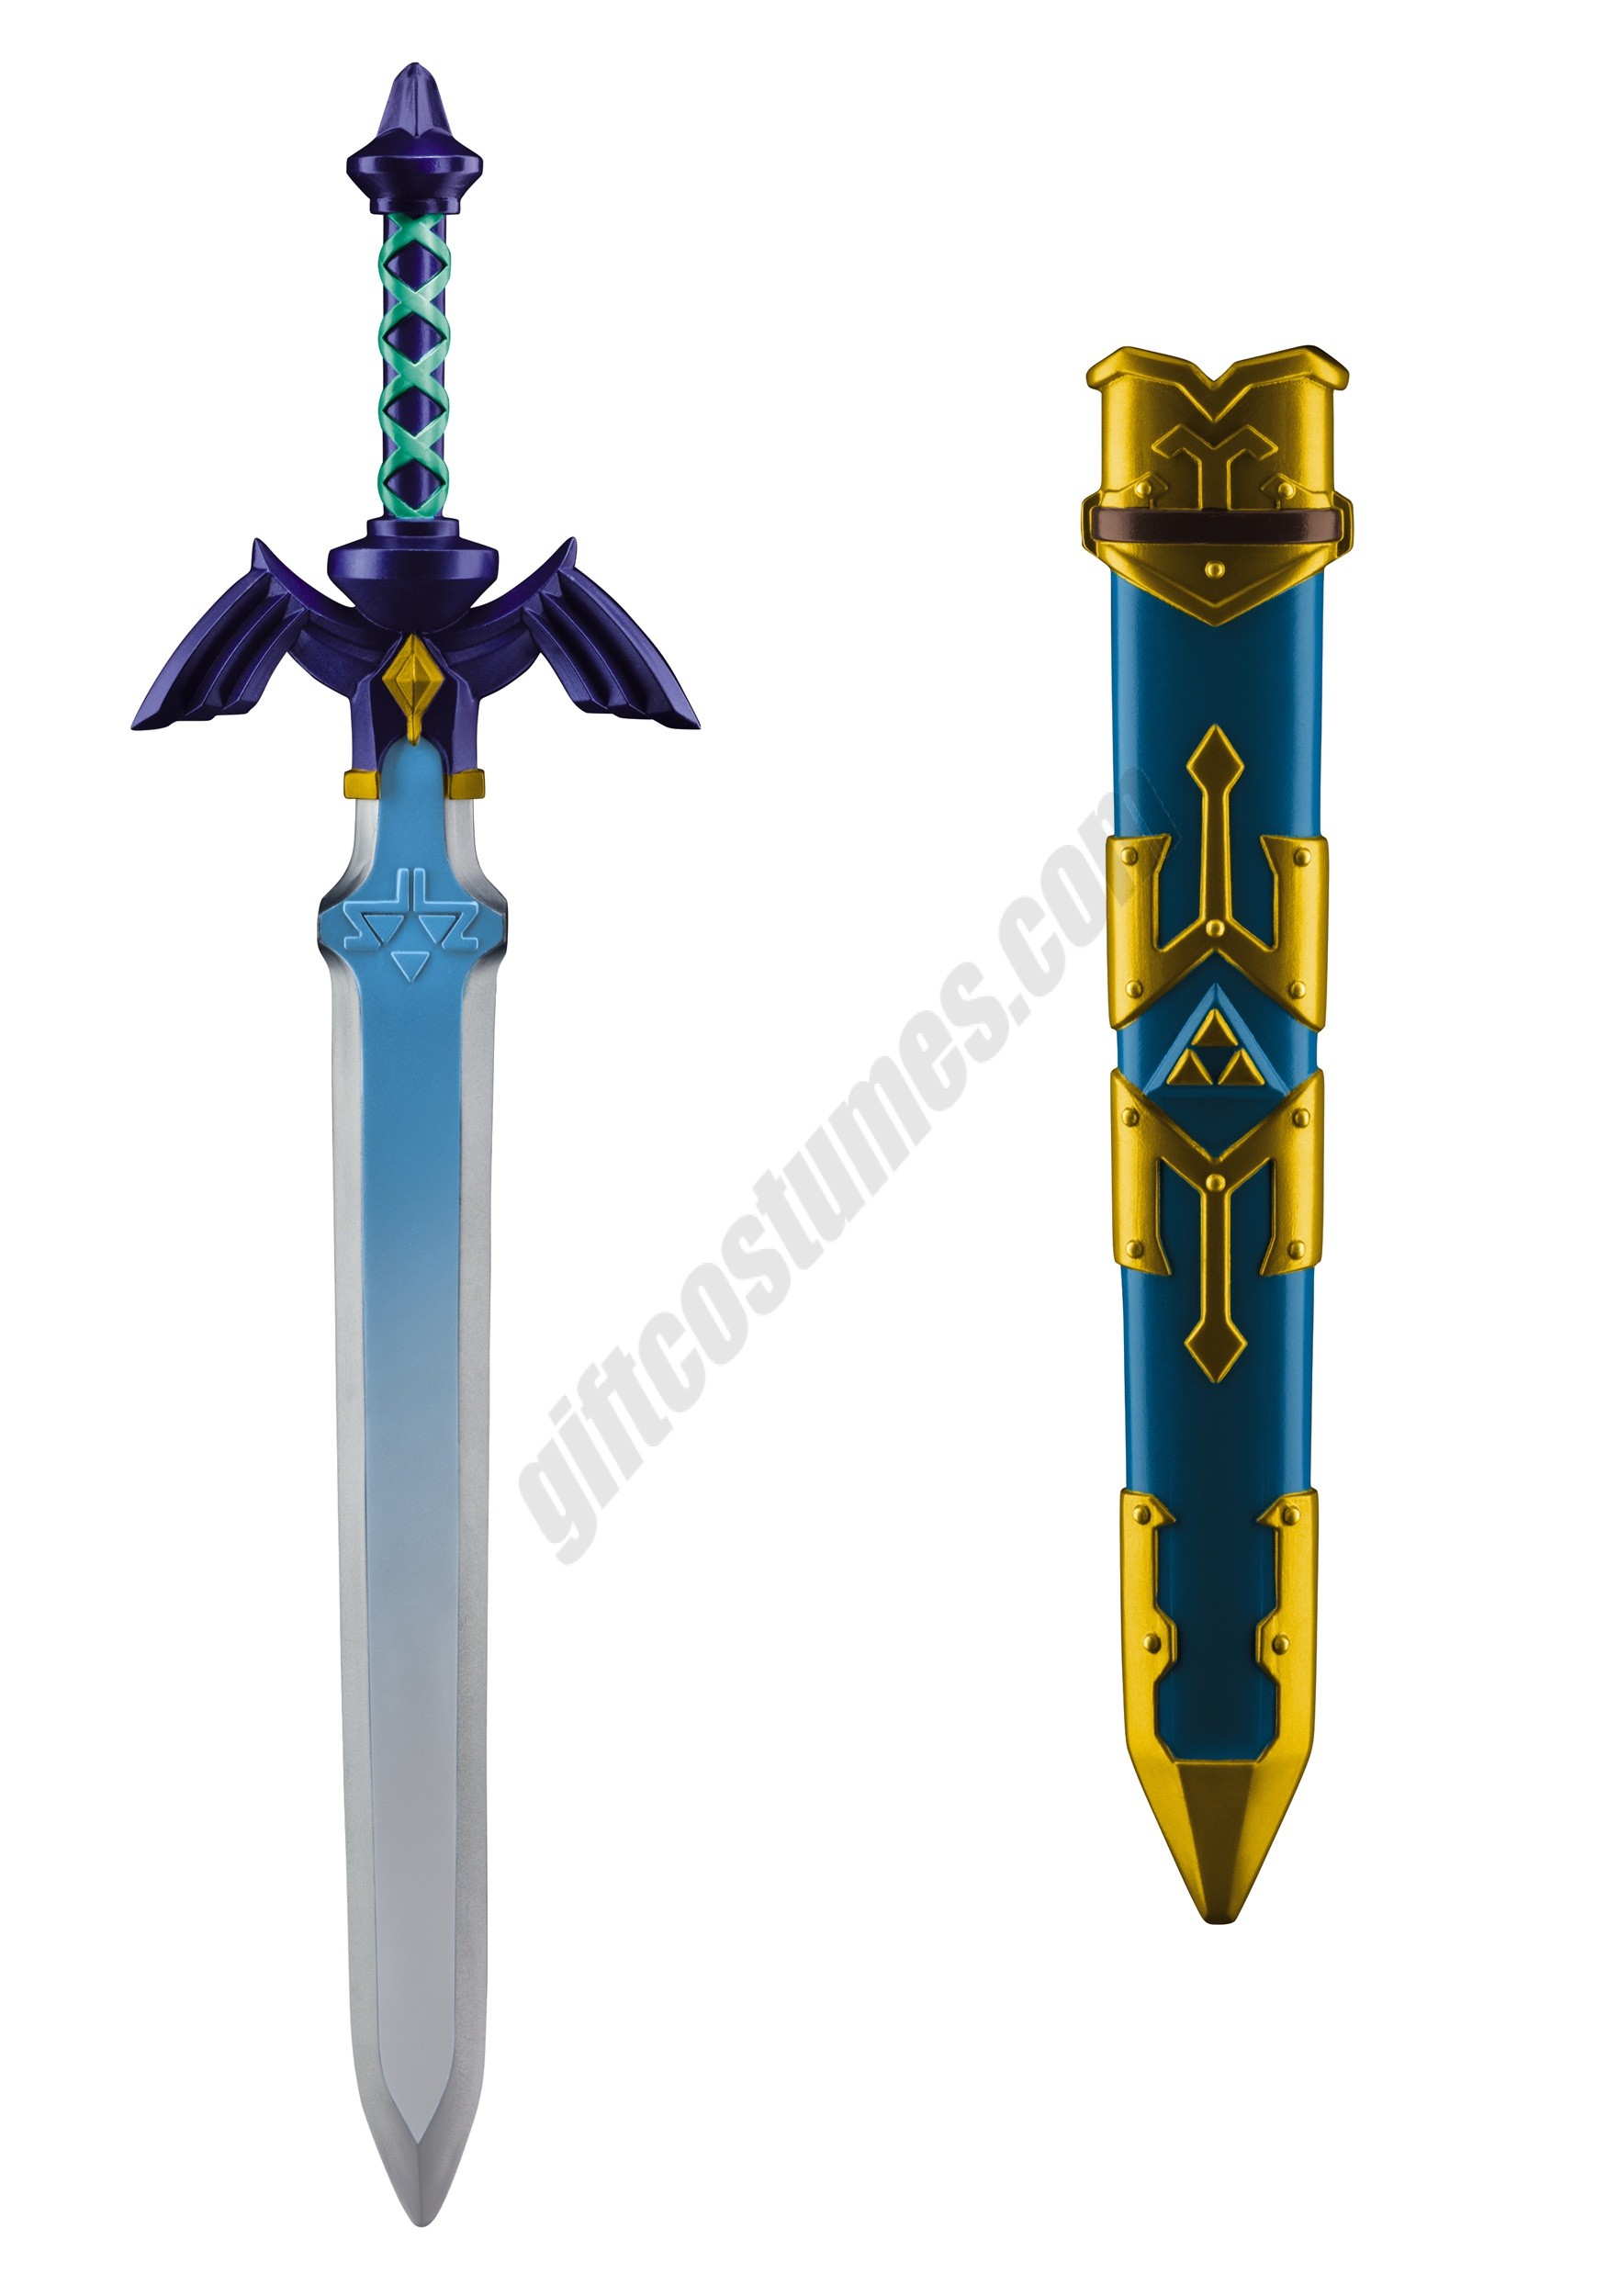 Legend of Zelda Link Sword Promotions - Legend of Zelda Link Sword Promotions